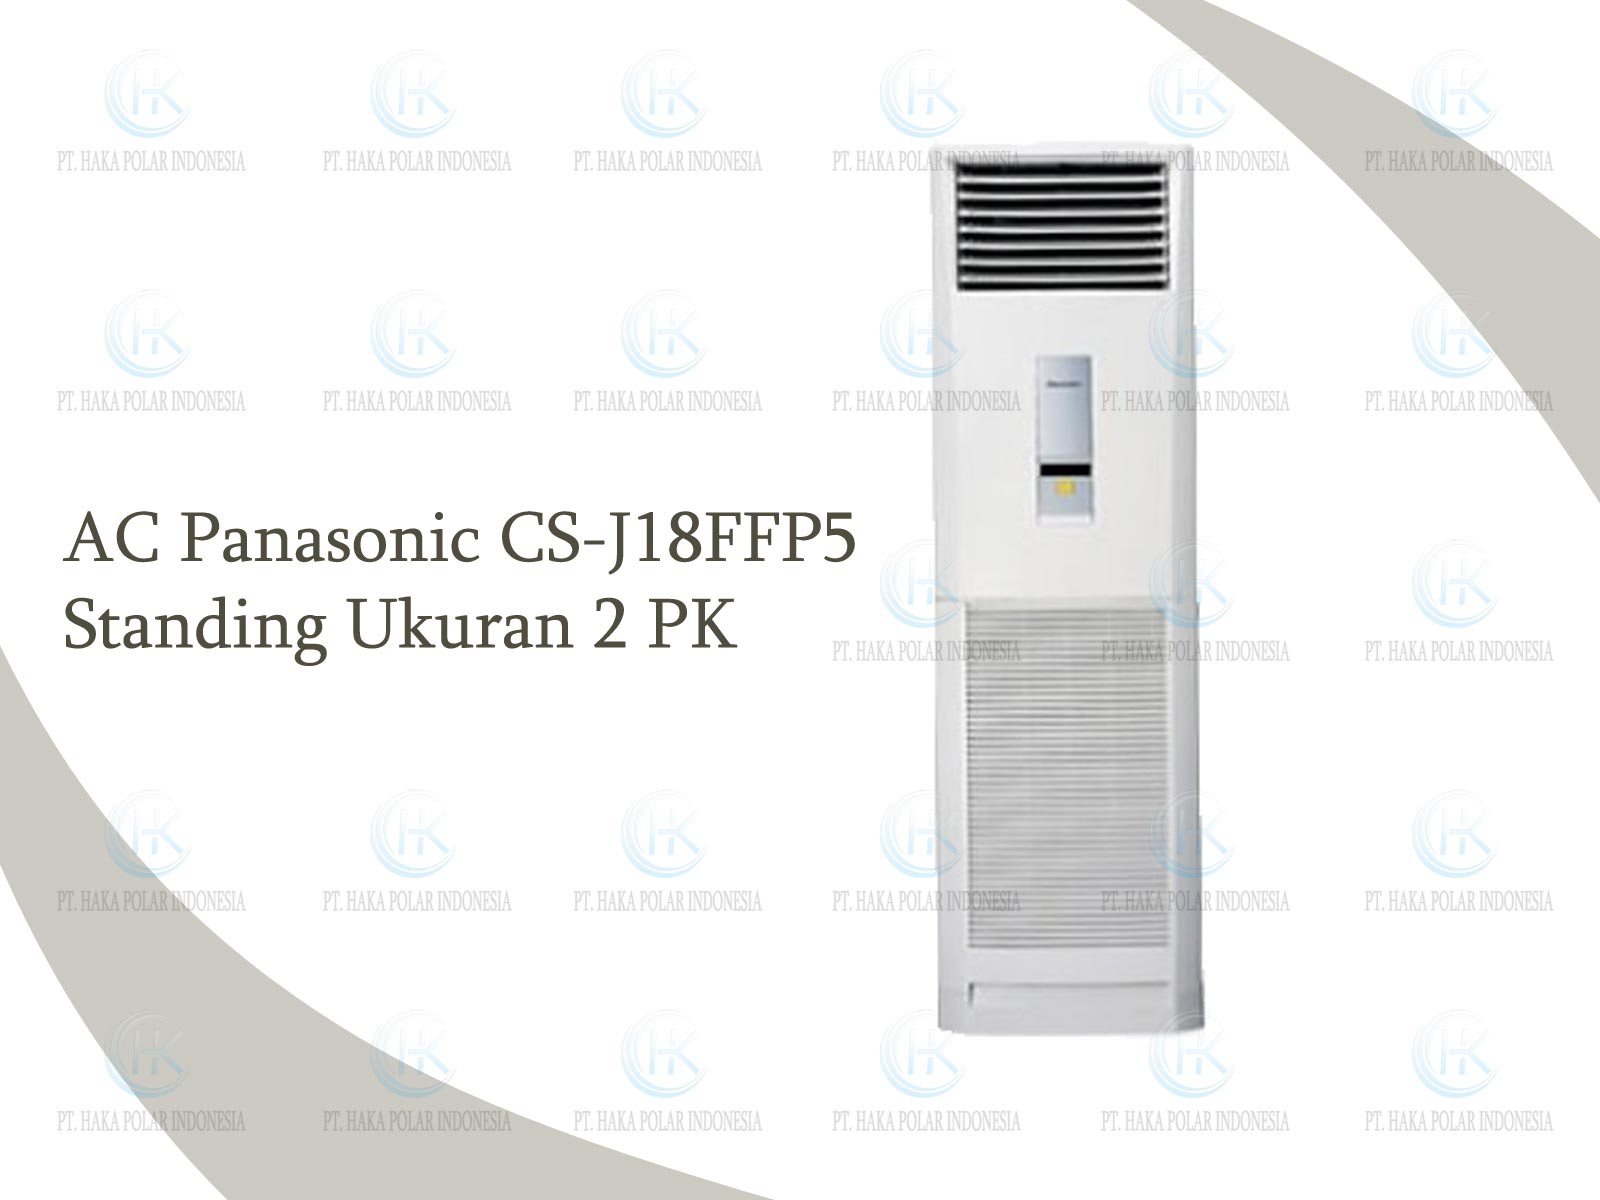 Jual AC Panasonic CS-J18FFP5 2 PK Floor Standing R410a